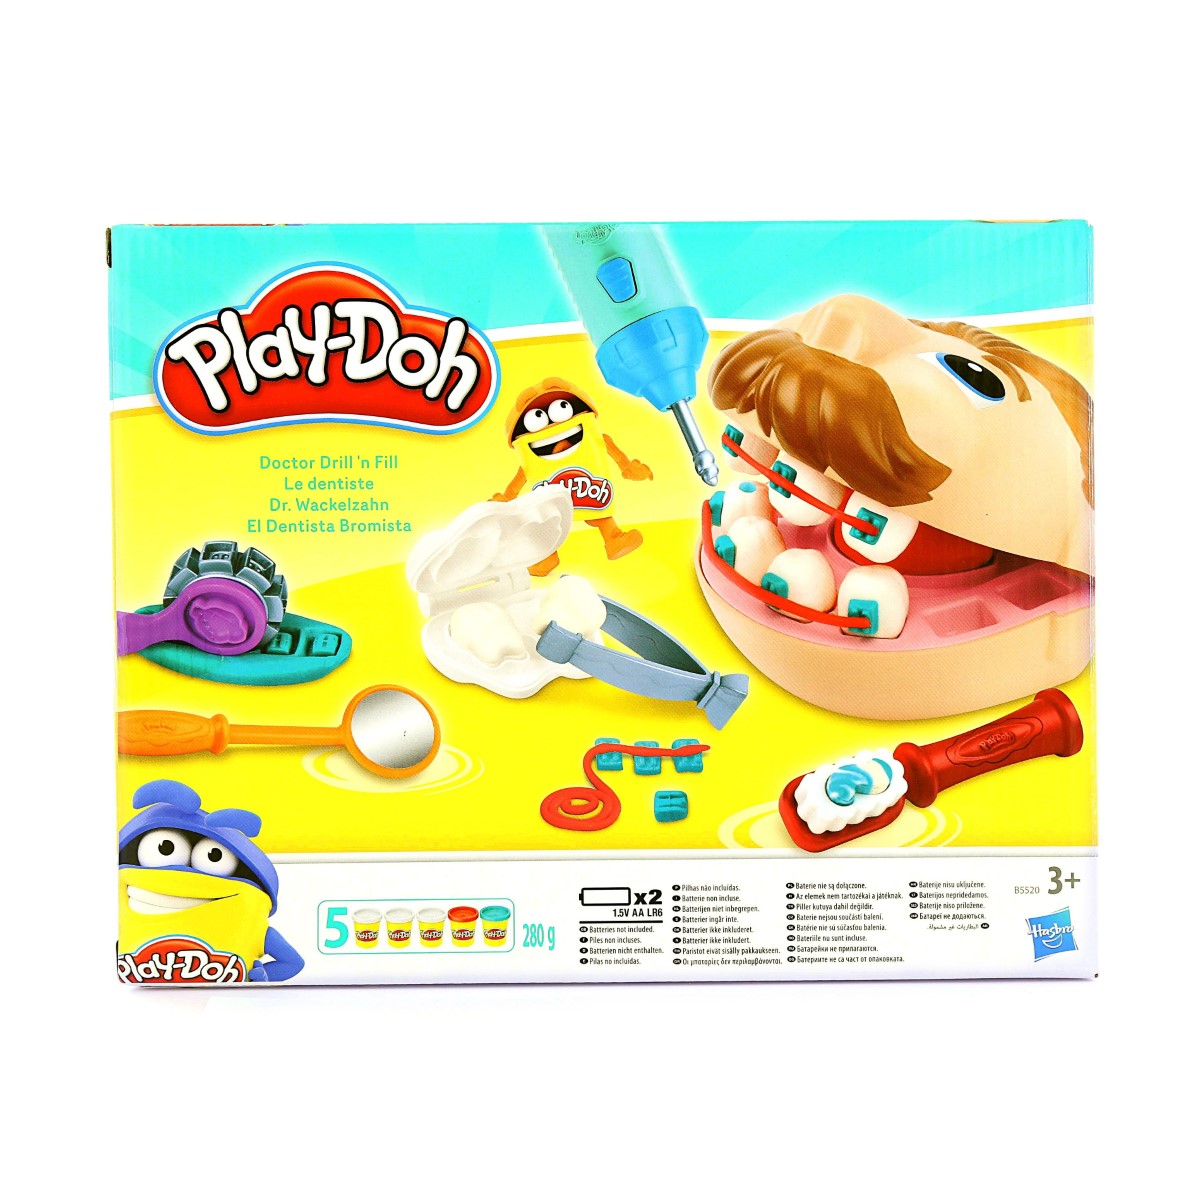 Hasbro Play Doh Doctor Drill N Fill Playset